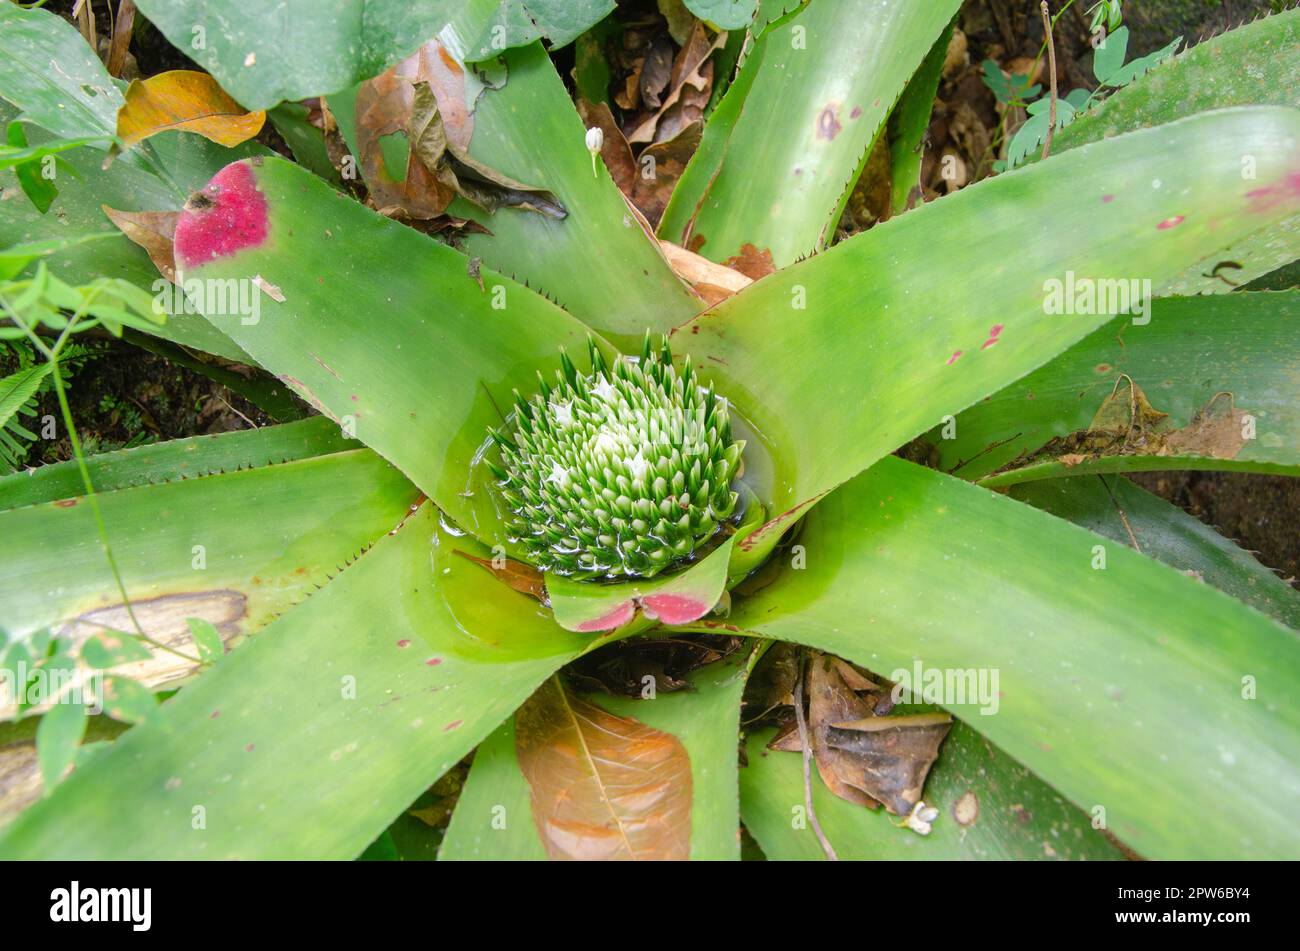 Large Marmorata Bromeliad Plant (bromelia quesnelia), Urban or Tropical plant, ornamental leaves grow upright like tentacles, with morning sap on its Stock Photo